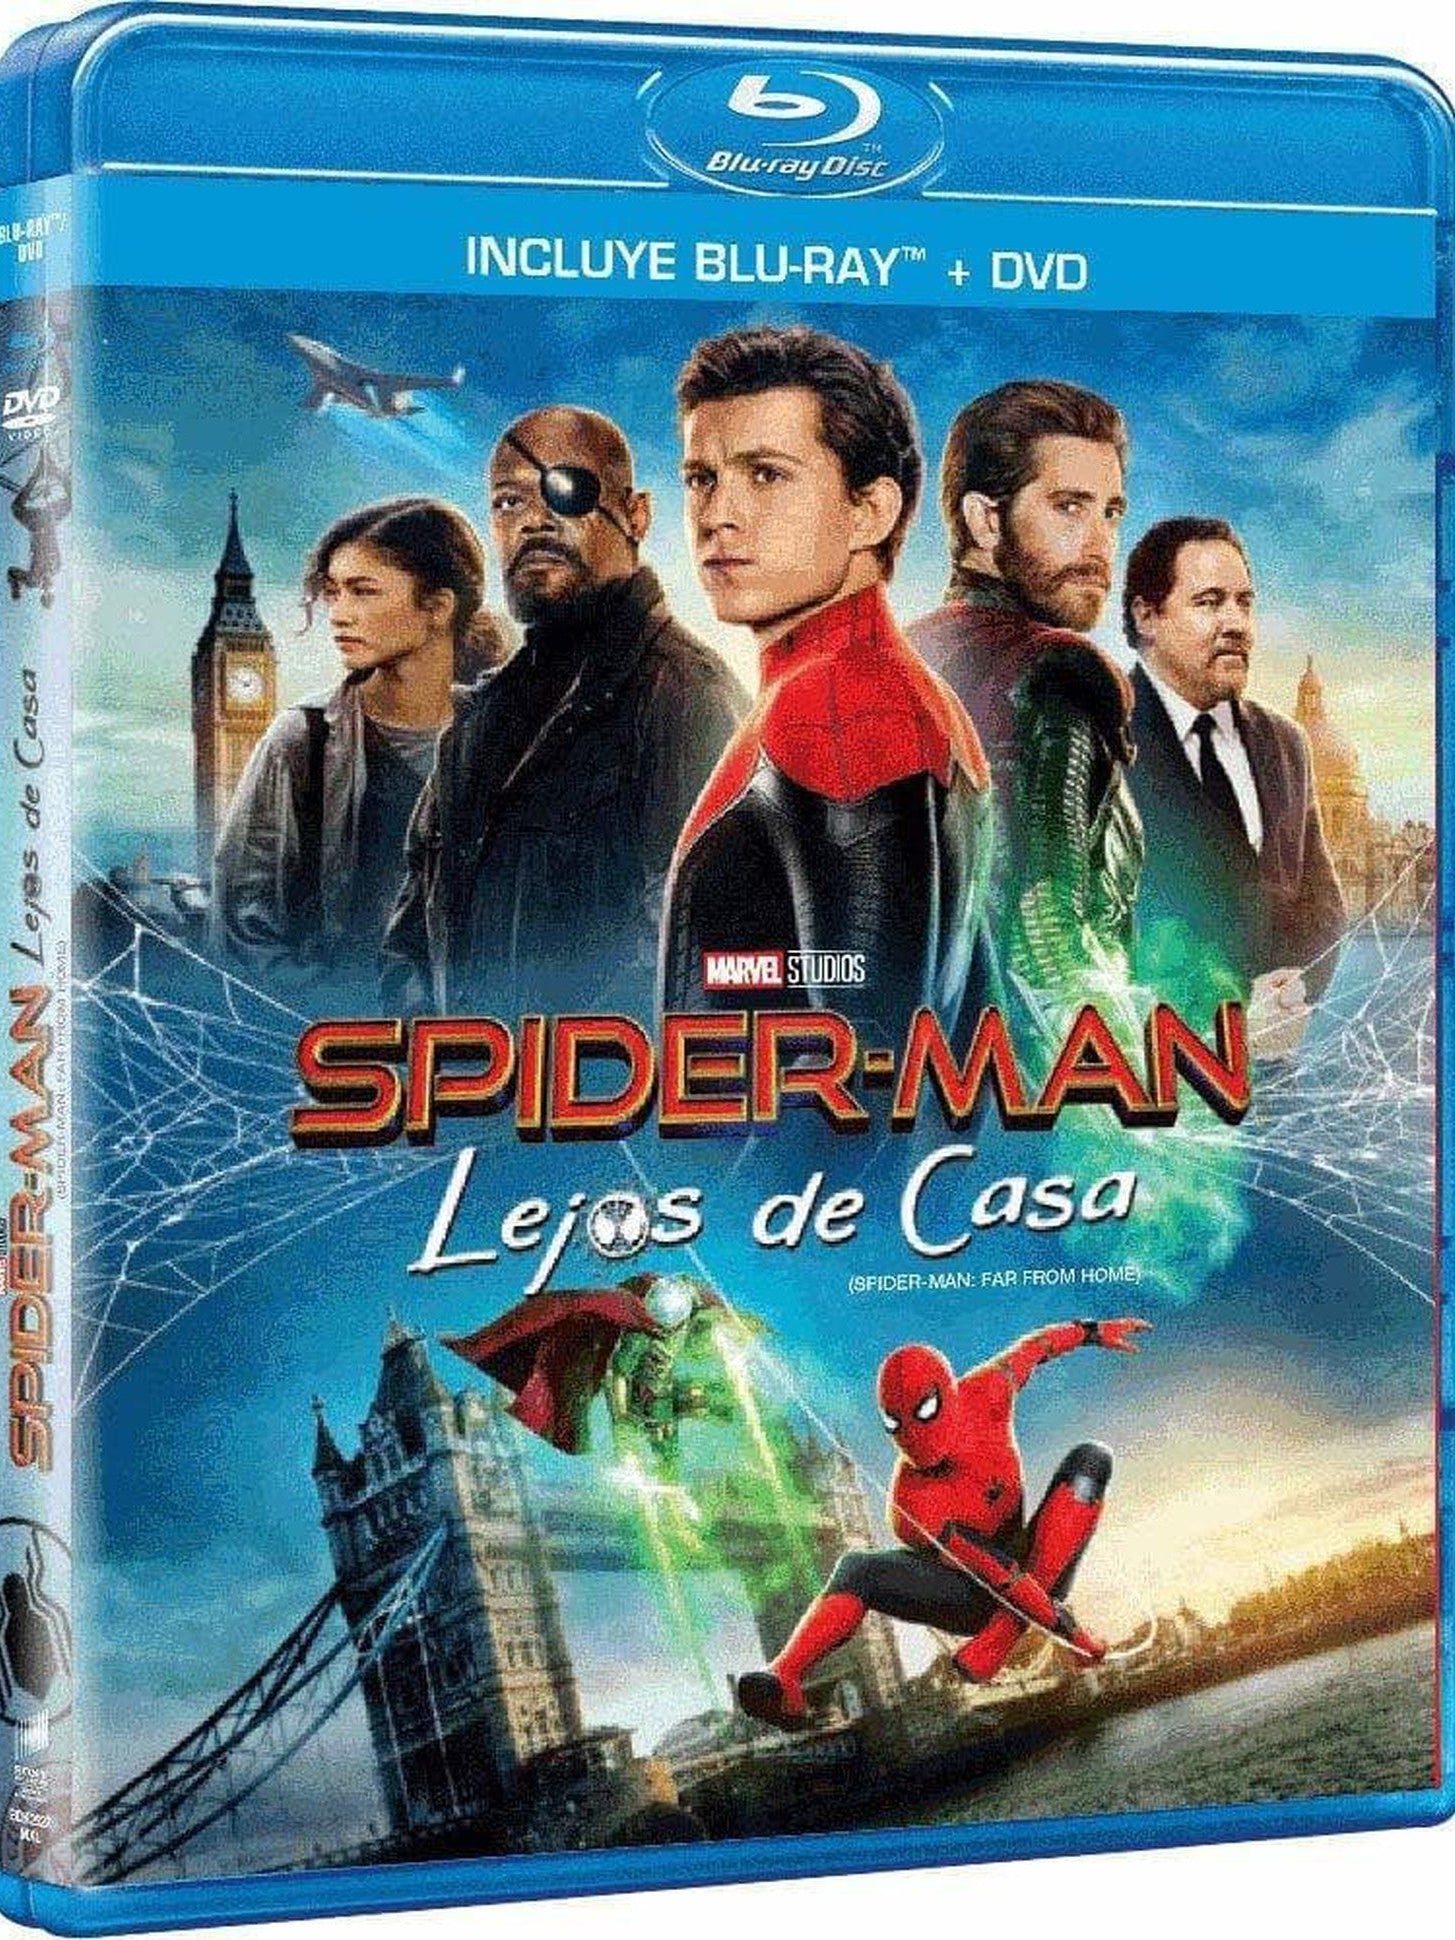 Spider-Man: Lejos de Casa (Spider-Man: Far from Home) - Blu-Ray